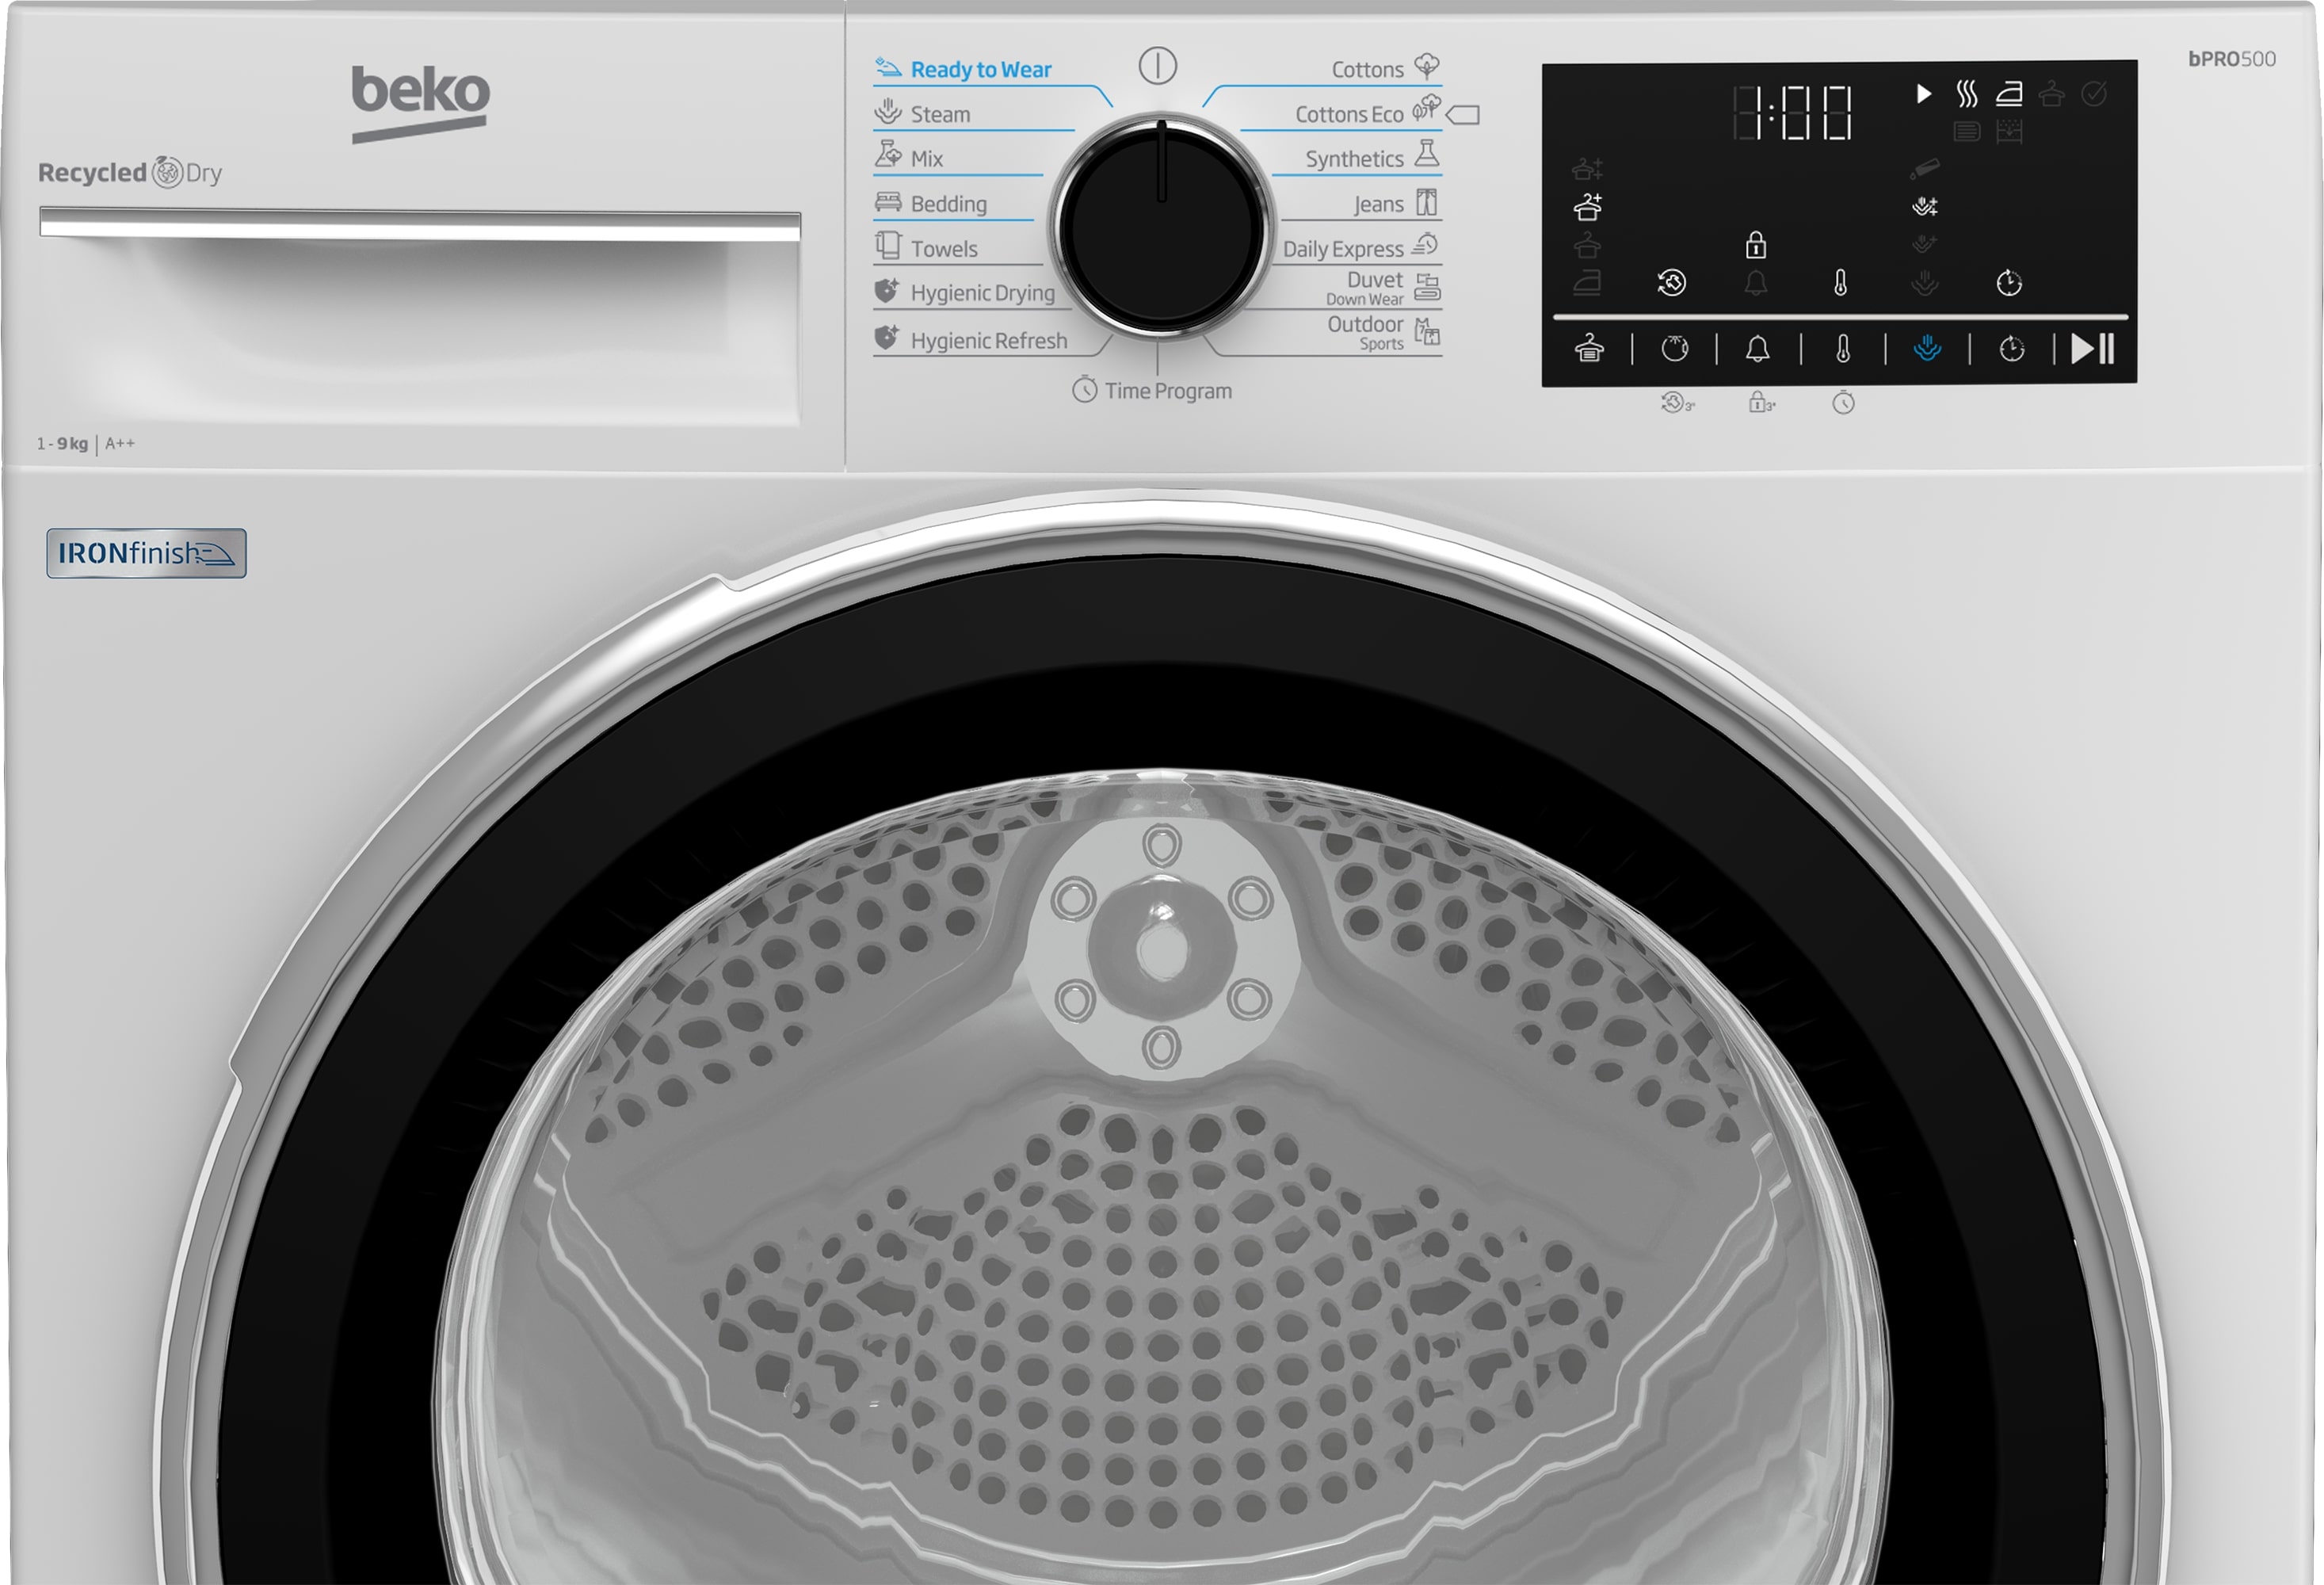 BEKO A++ Clothes Dryer (Heat Pump, 9 kg)